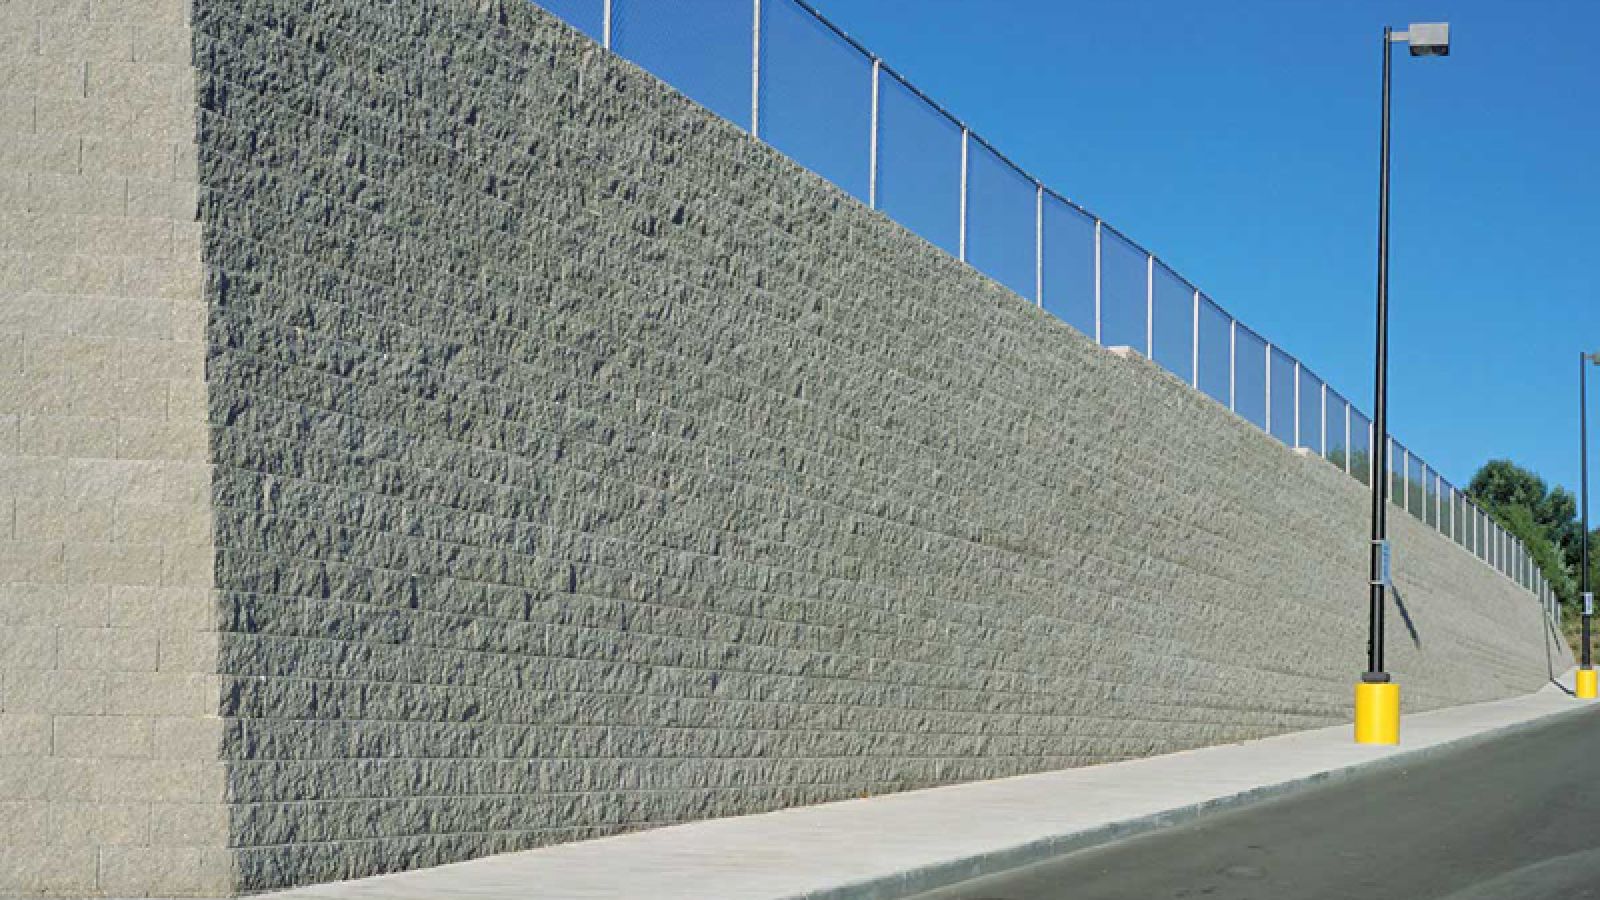 Keystone Standard® Retaining Wall blocks by Keystone Hardscapes, elegantly displayed at AR Stoneworks & Outdoor Living, showcasing its distinct split face design.